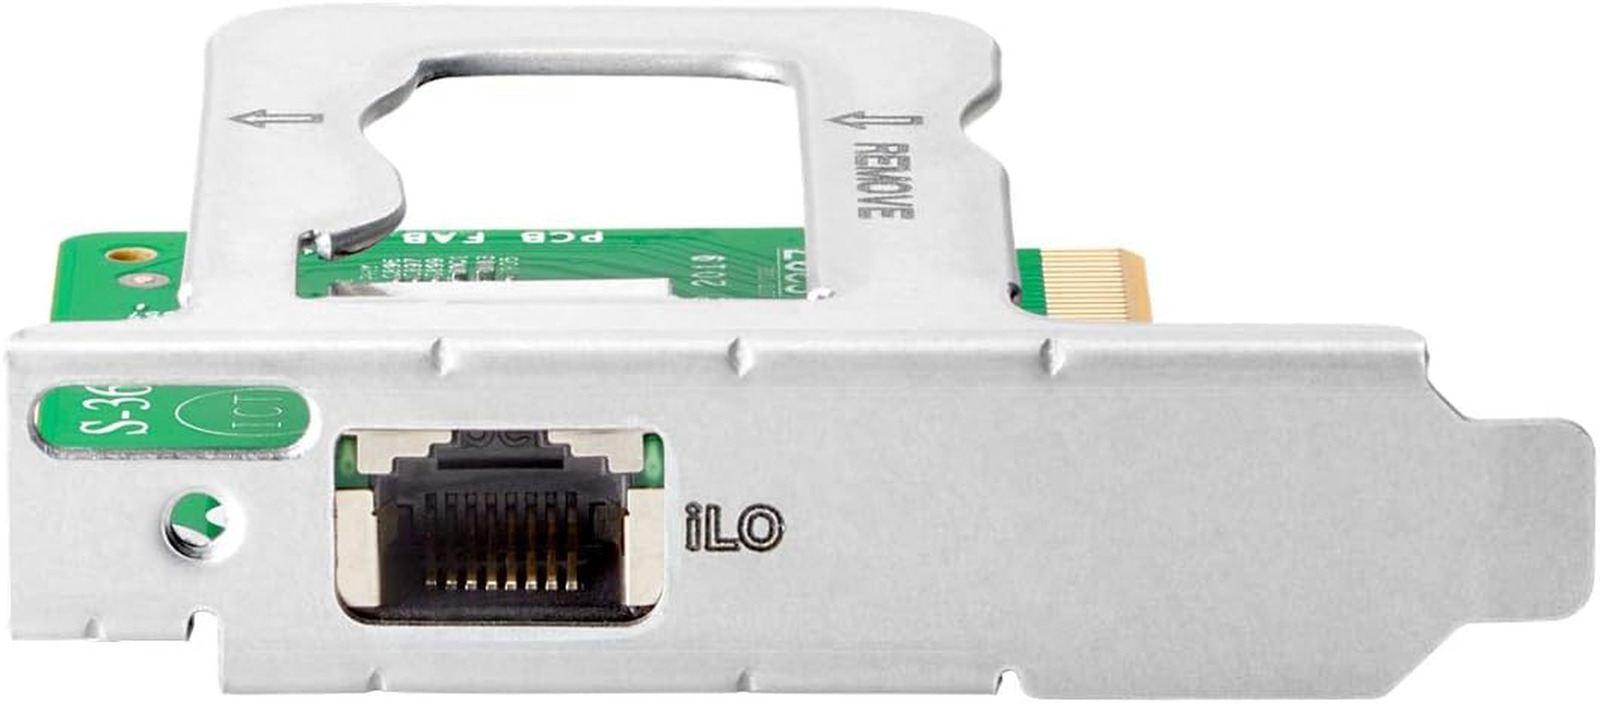 Hpe Microserver Gen10 plus Ilo Enablement Kit